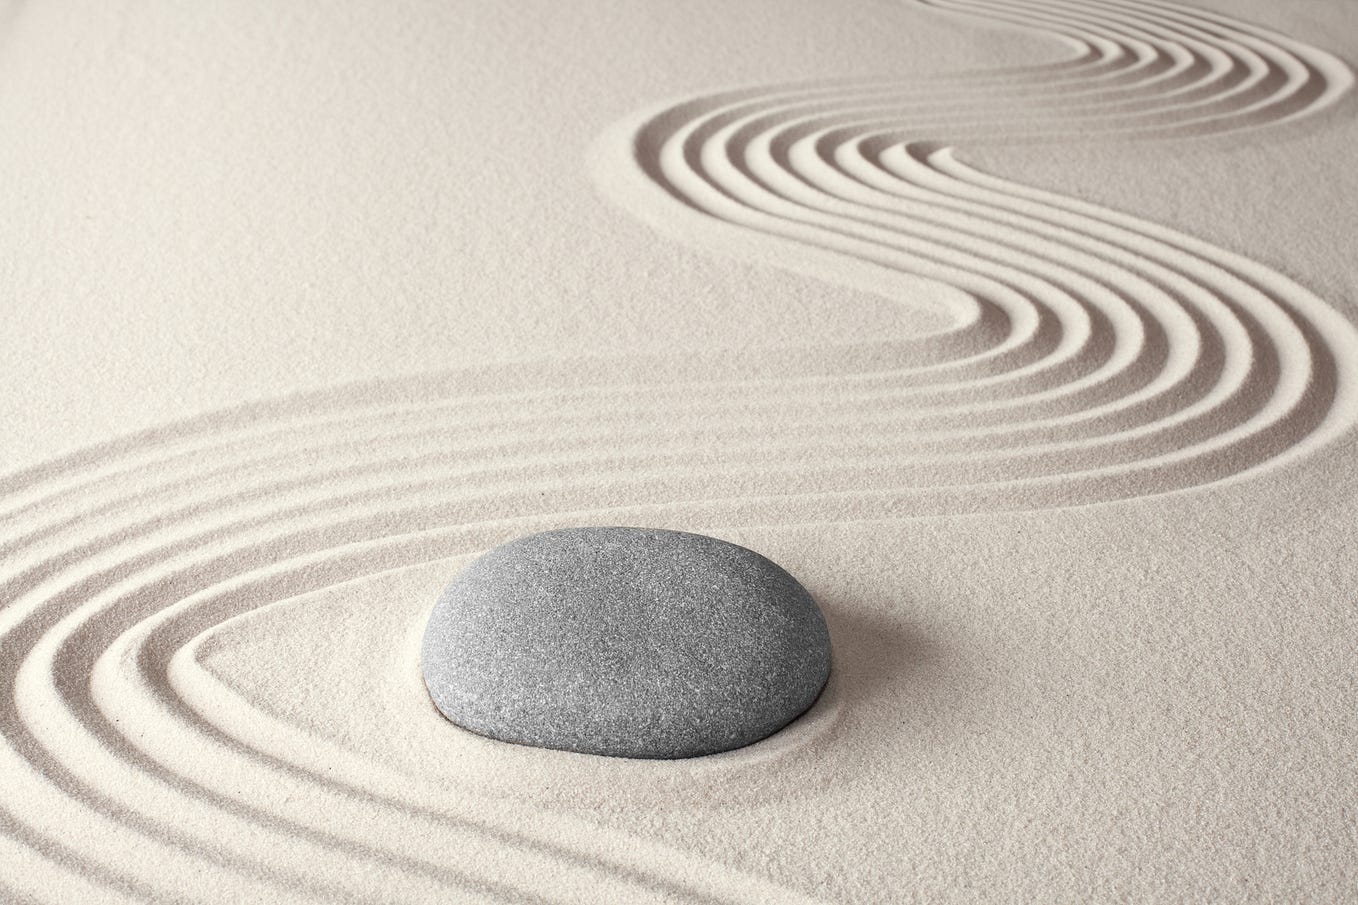 Picture of a single rock in a sand zen garden